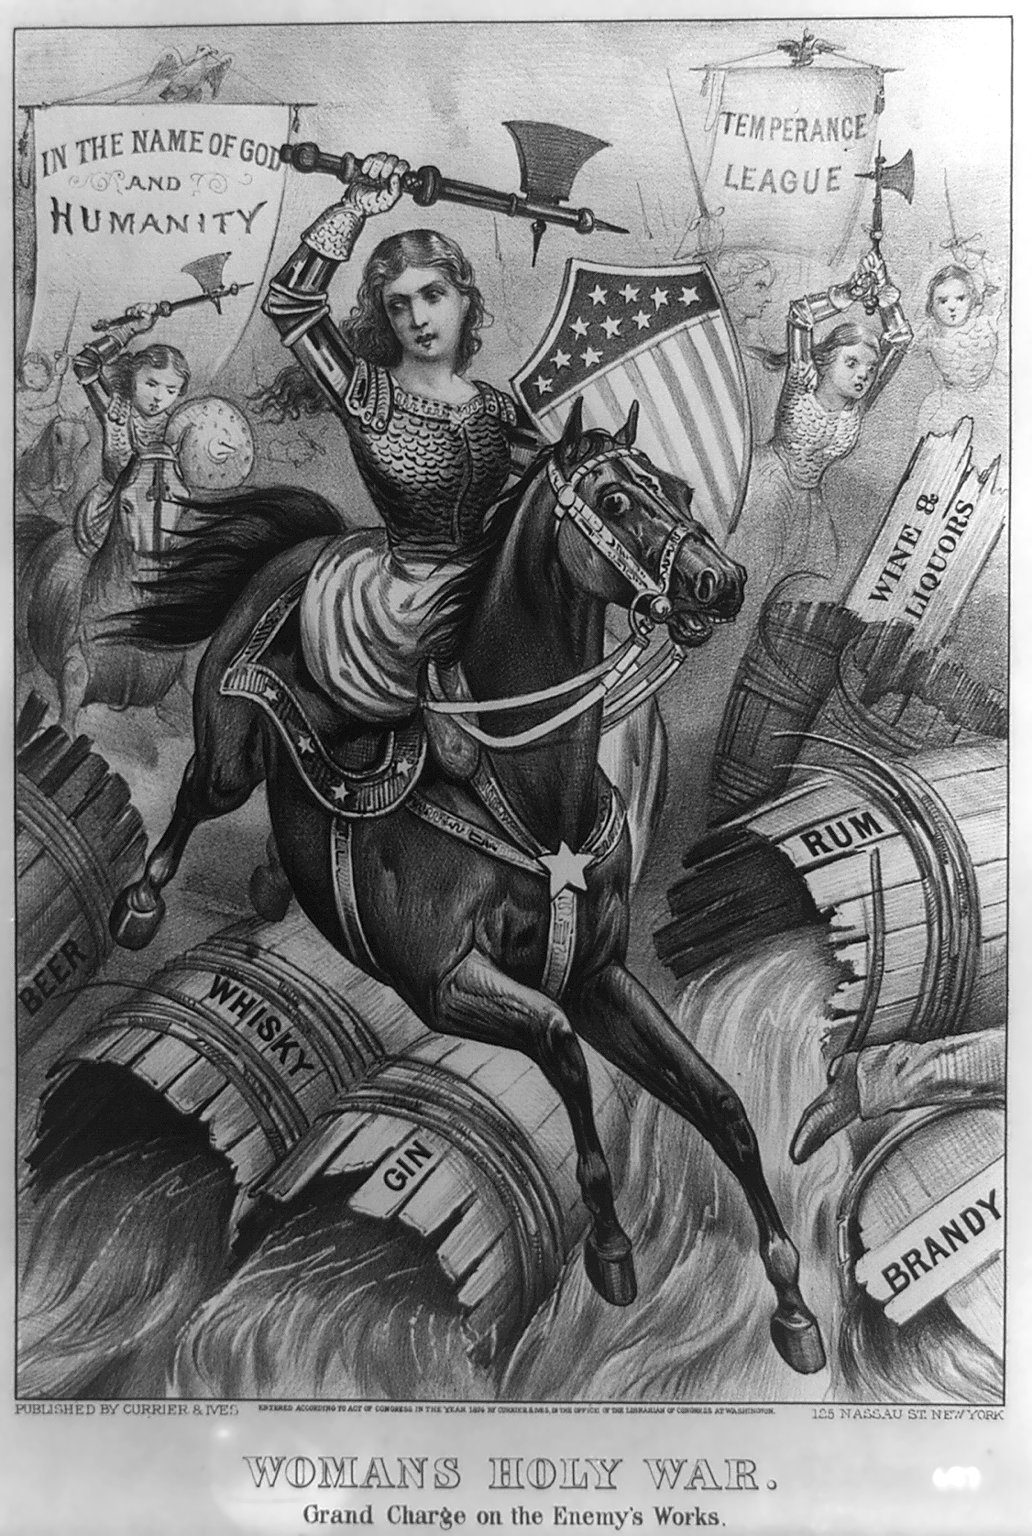 An allegorical 1874 political pro-prohibition cartoon